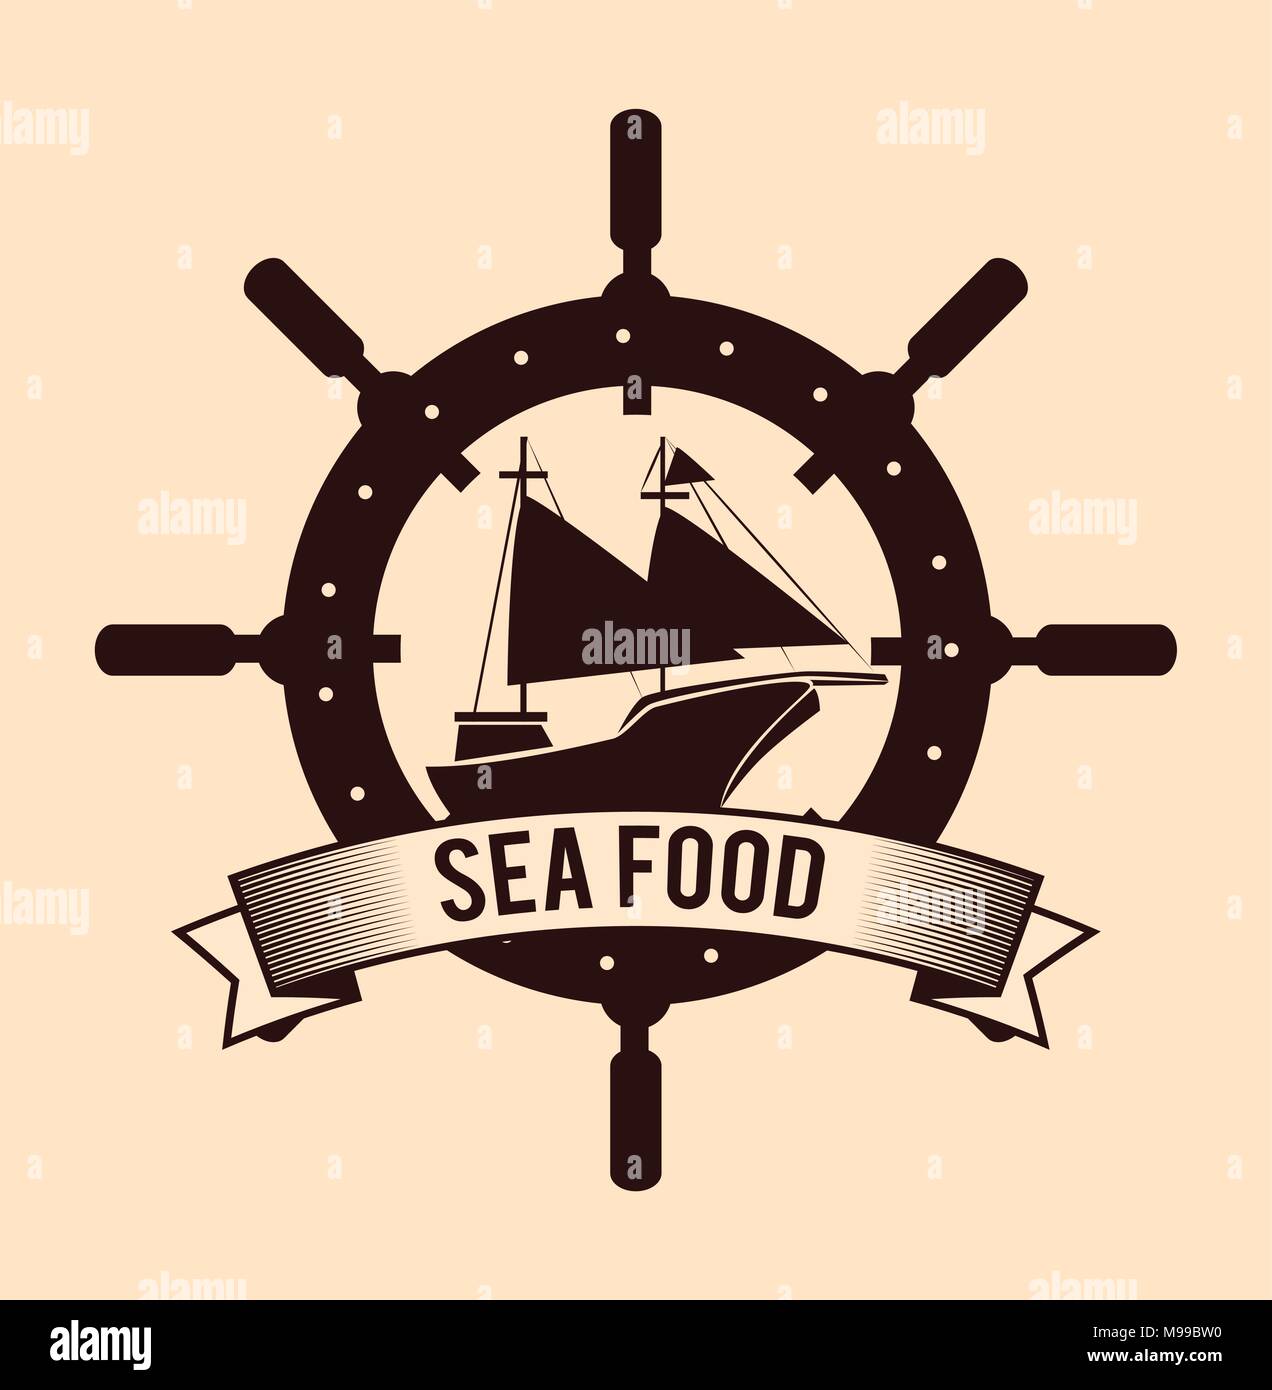 Sea food gastronomy graphic design, vector illustration eps10 Stock Vector